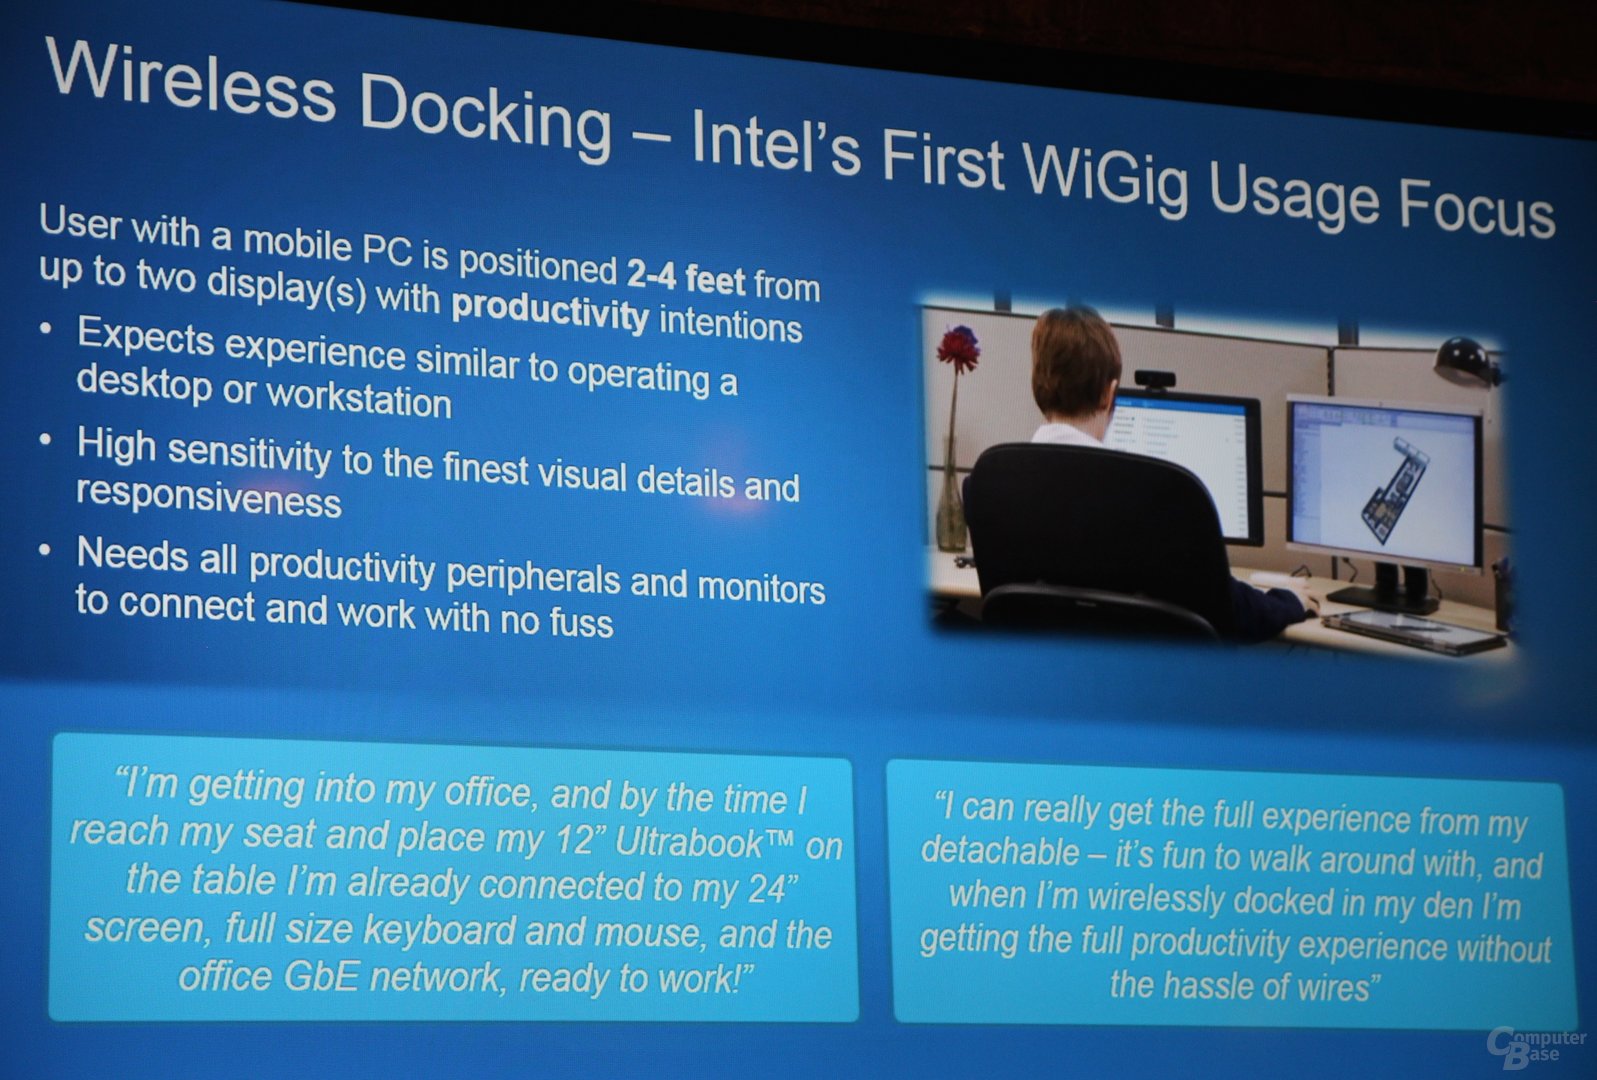 Intel Wireless Docking